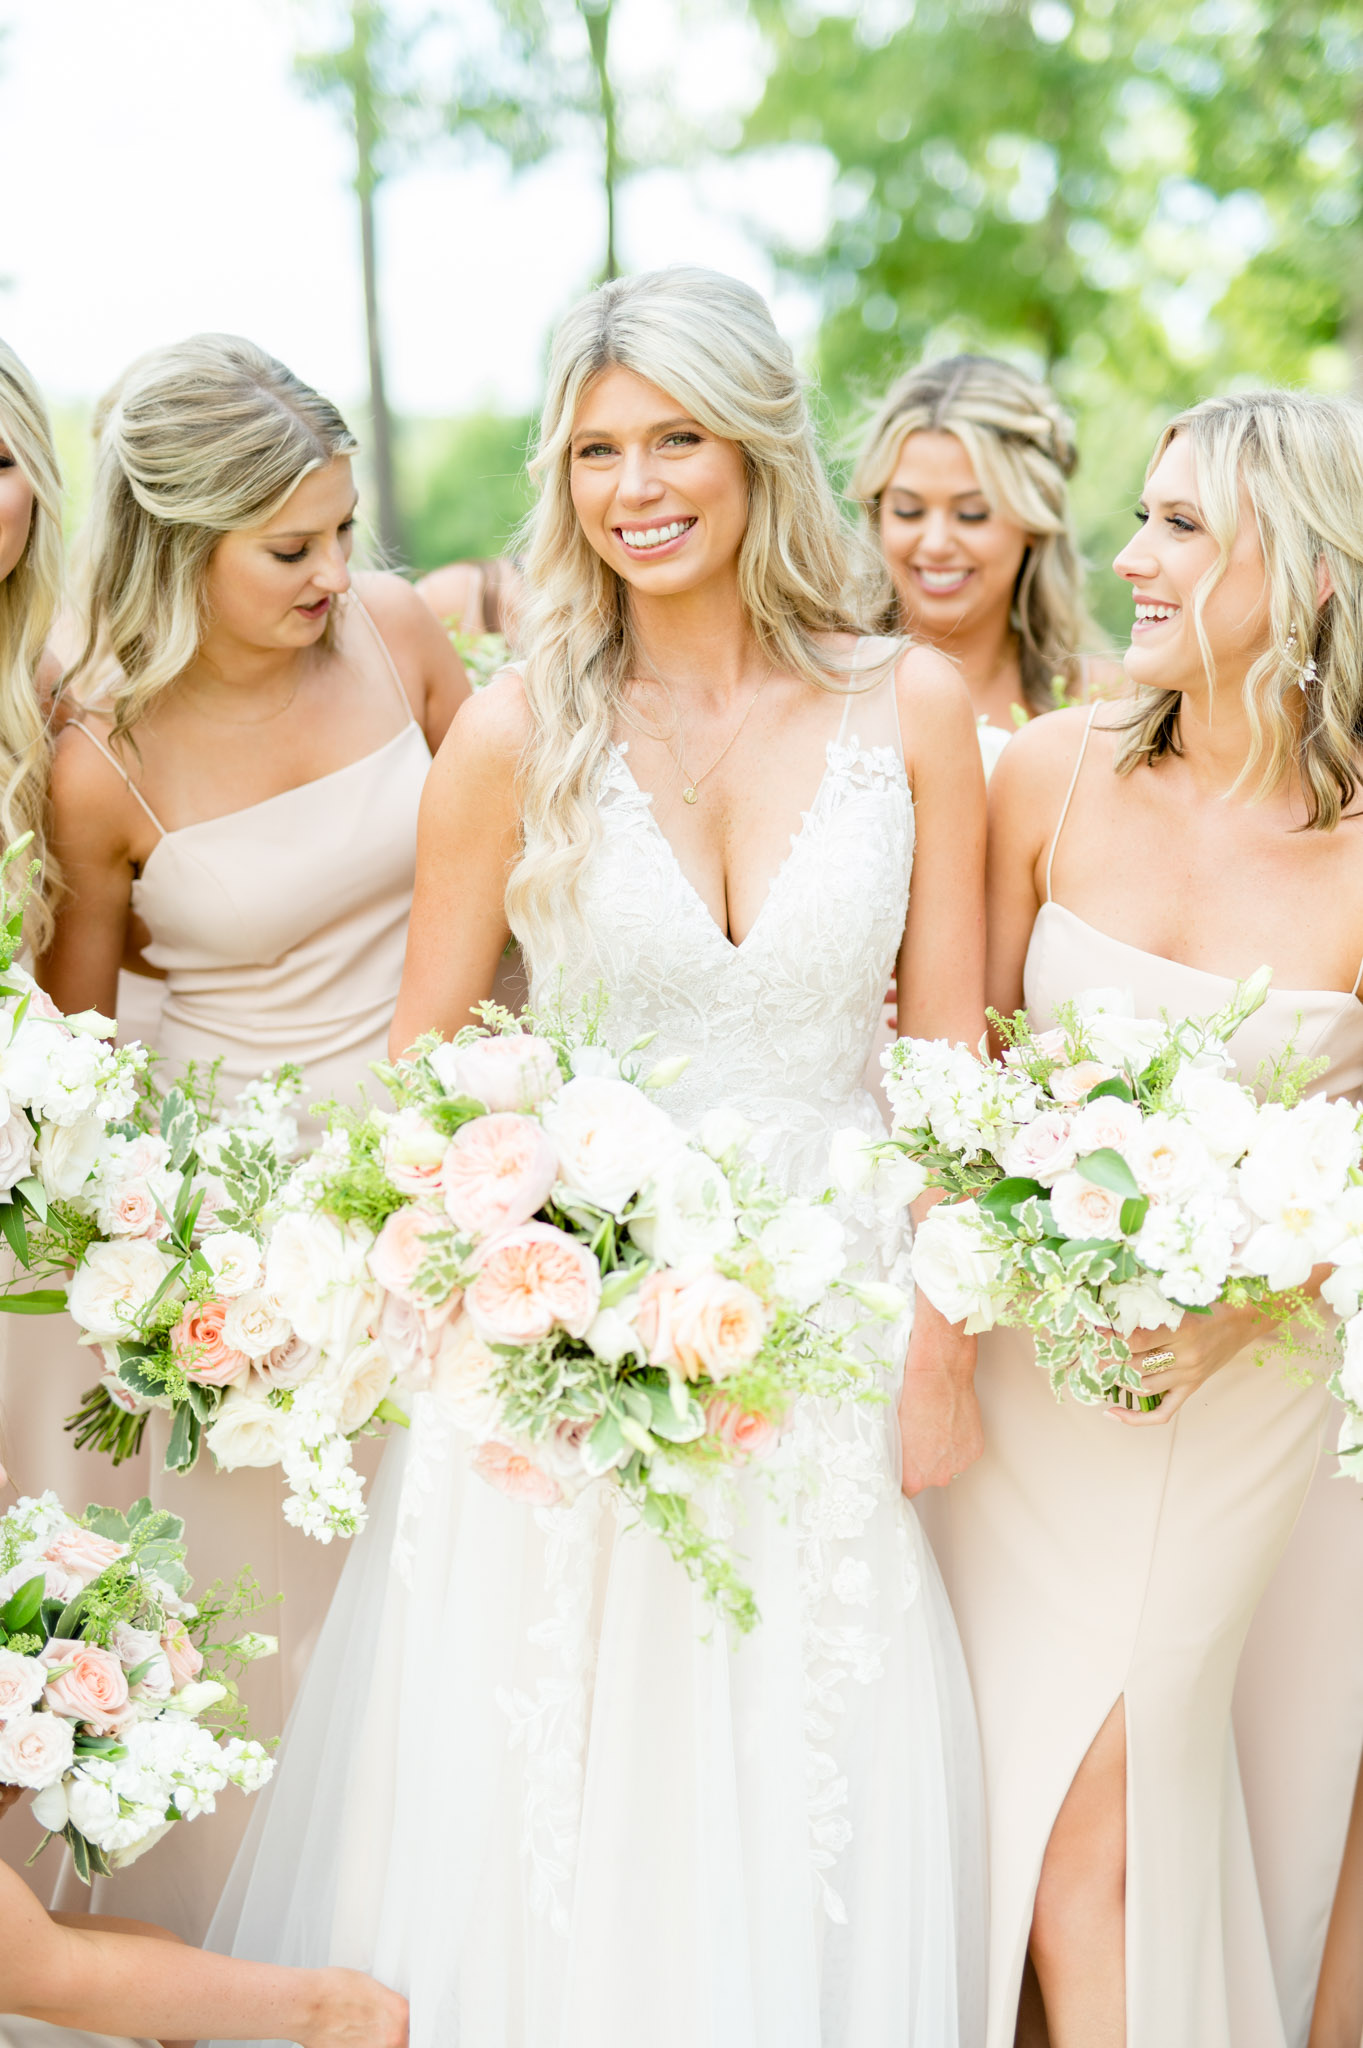 Bride smiles at camera while bridesmaids laugh.